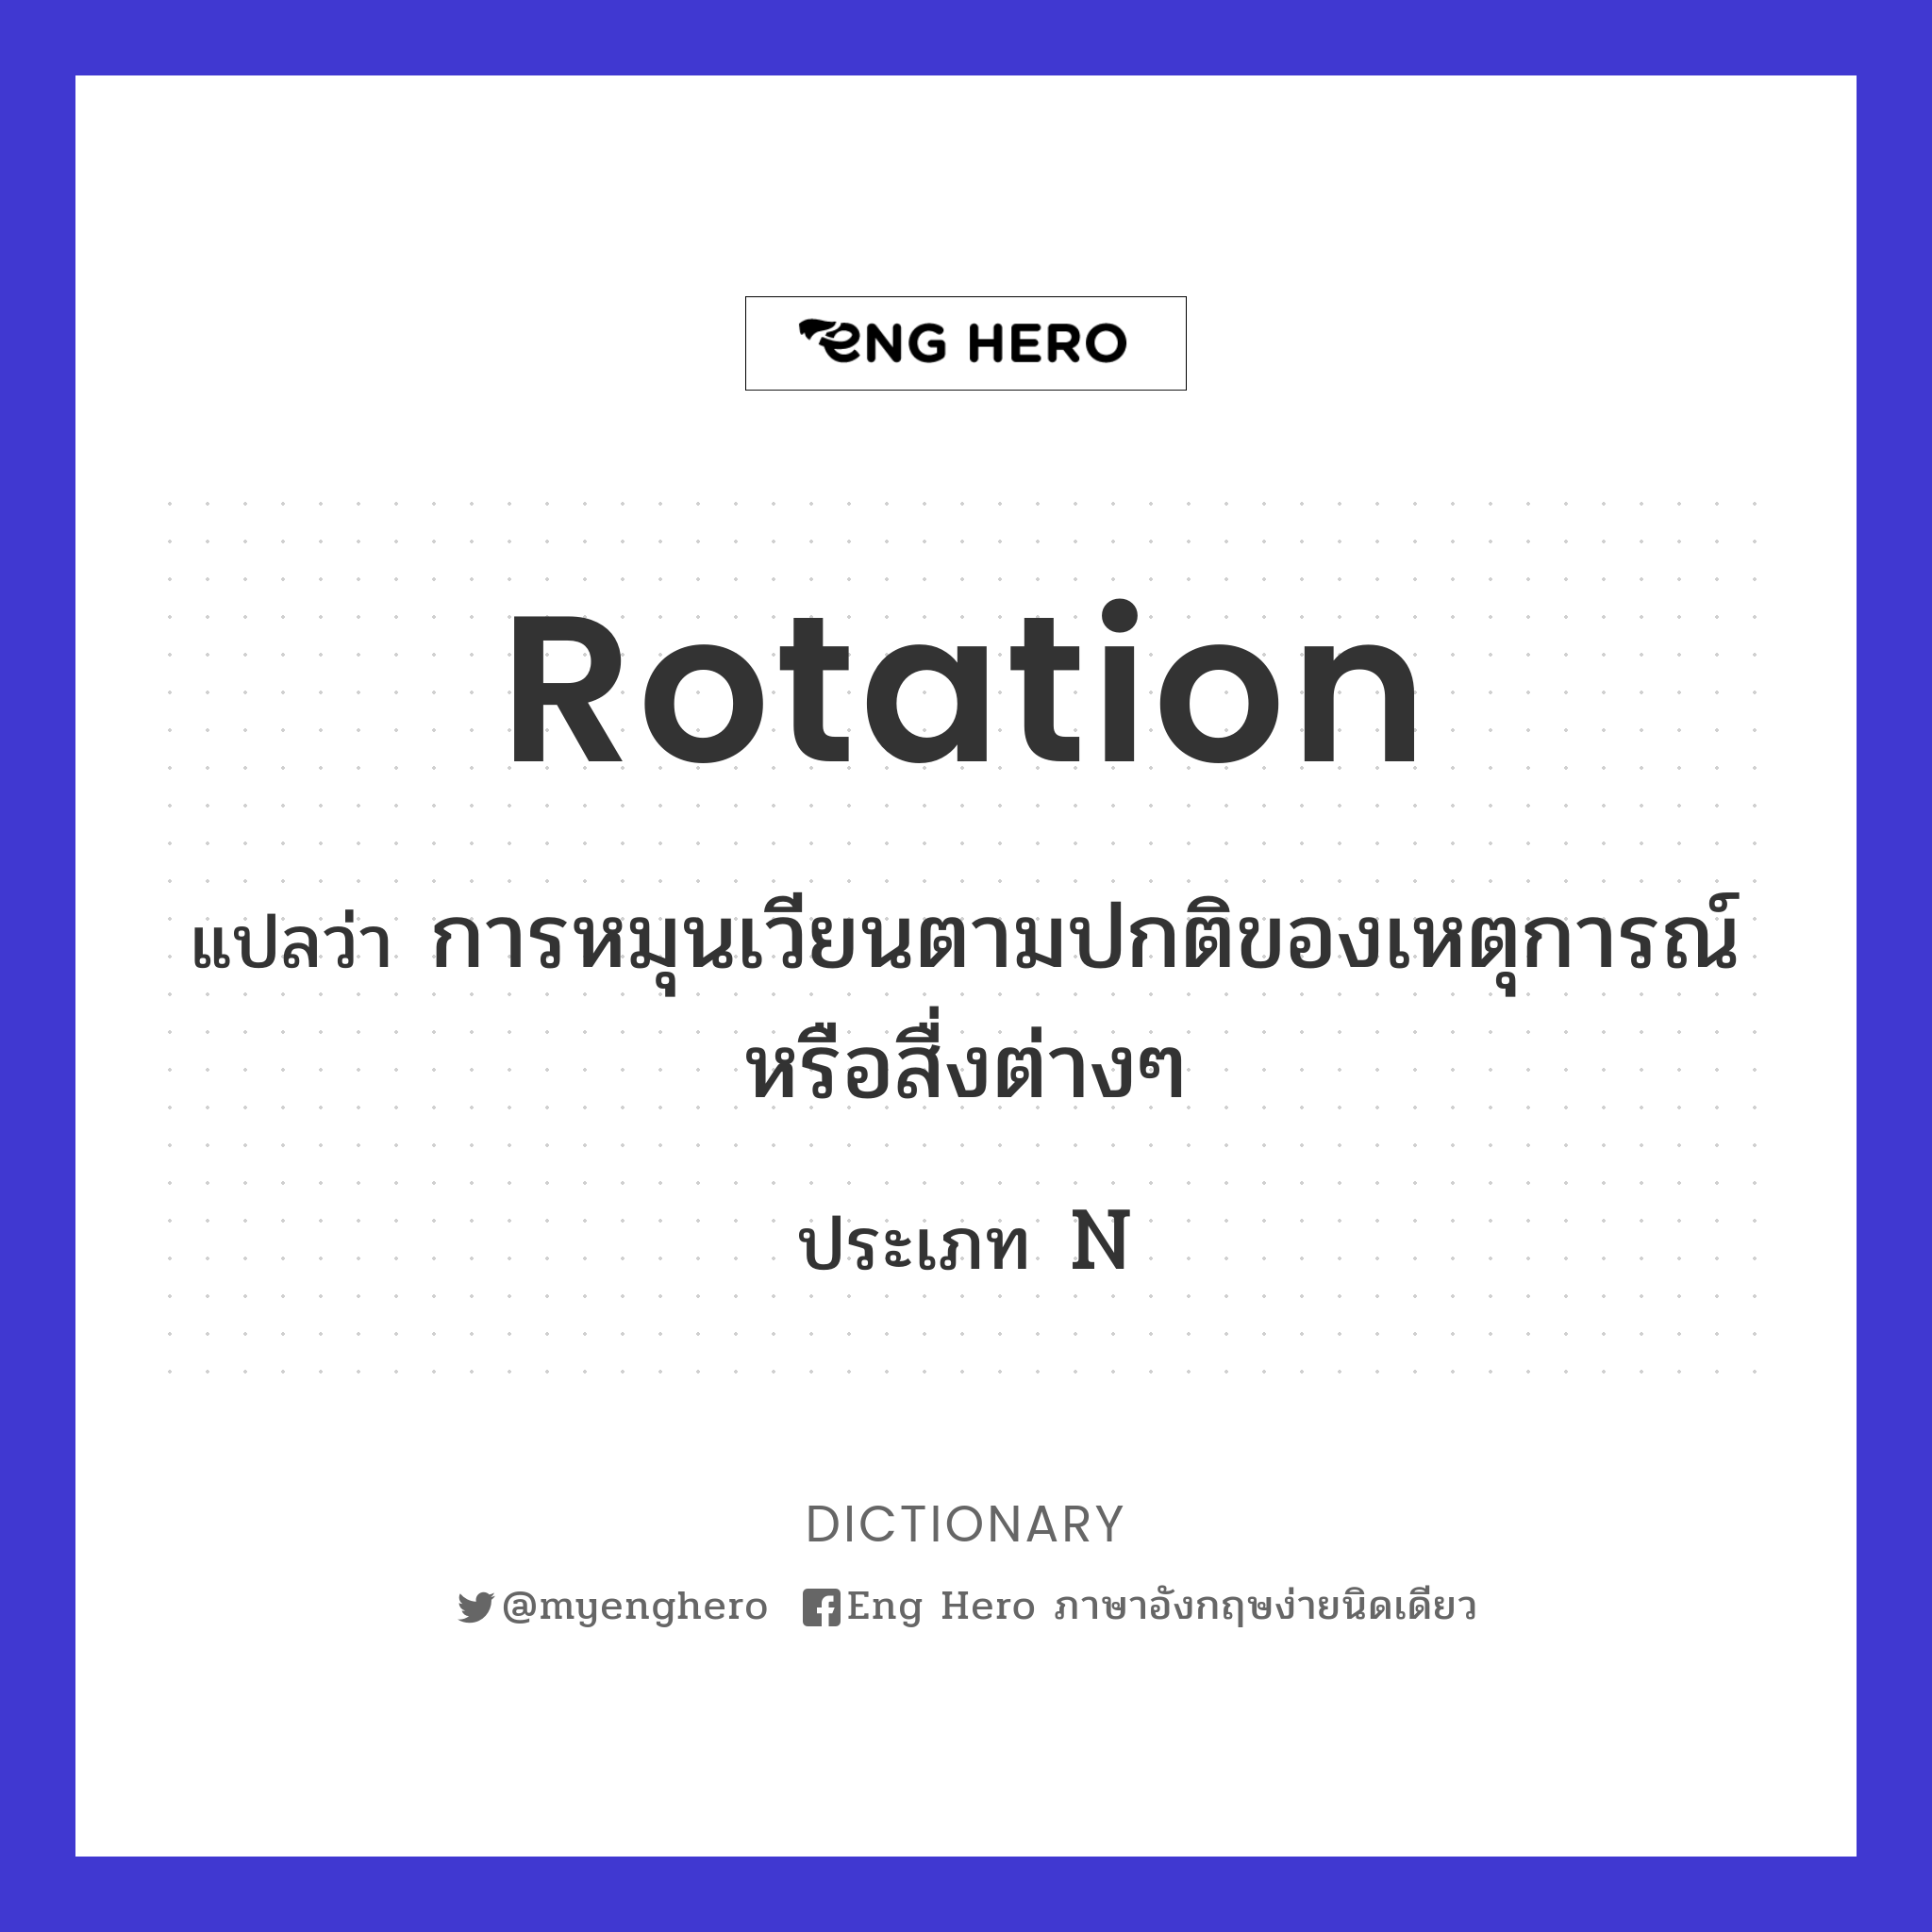 rotation